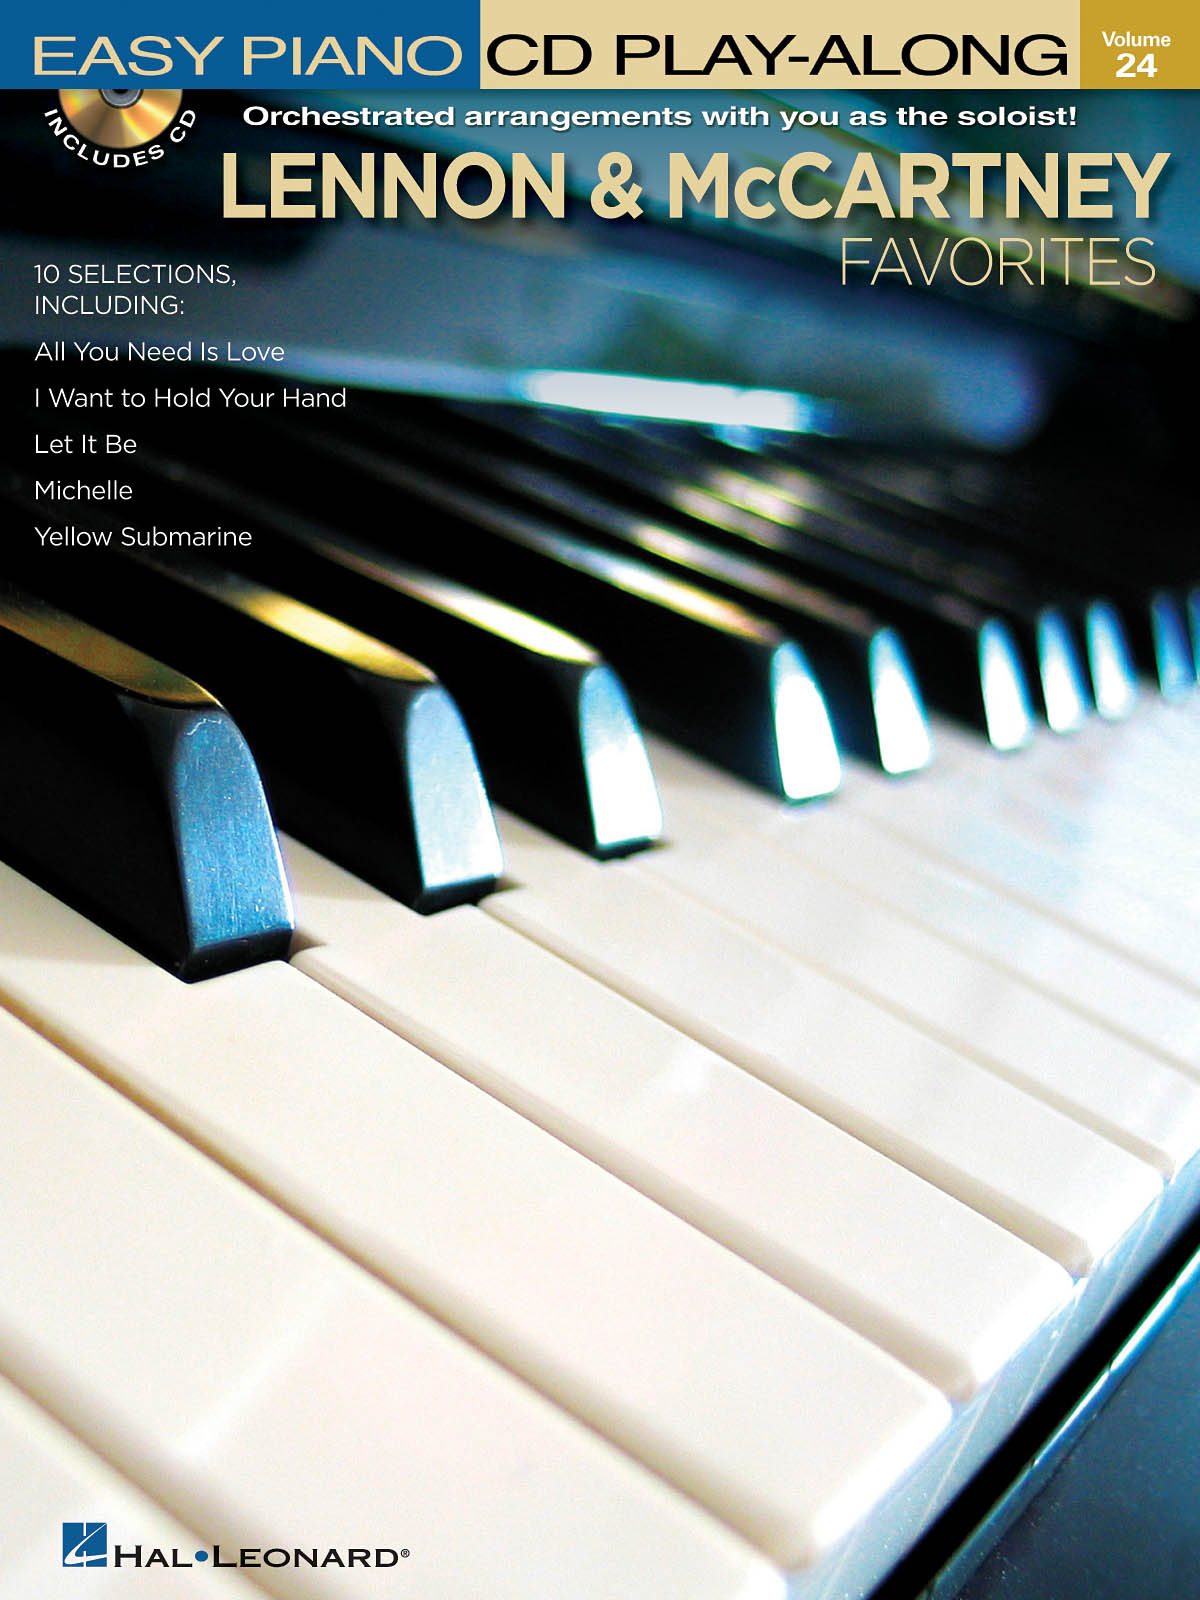 Easy Piano CD Play-Along Volume 24: Lennon & McCartney Favorites